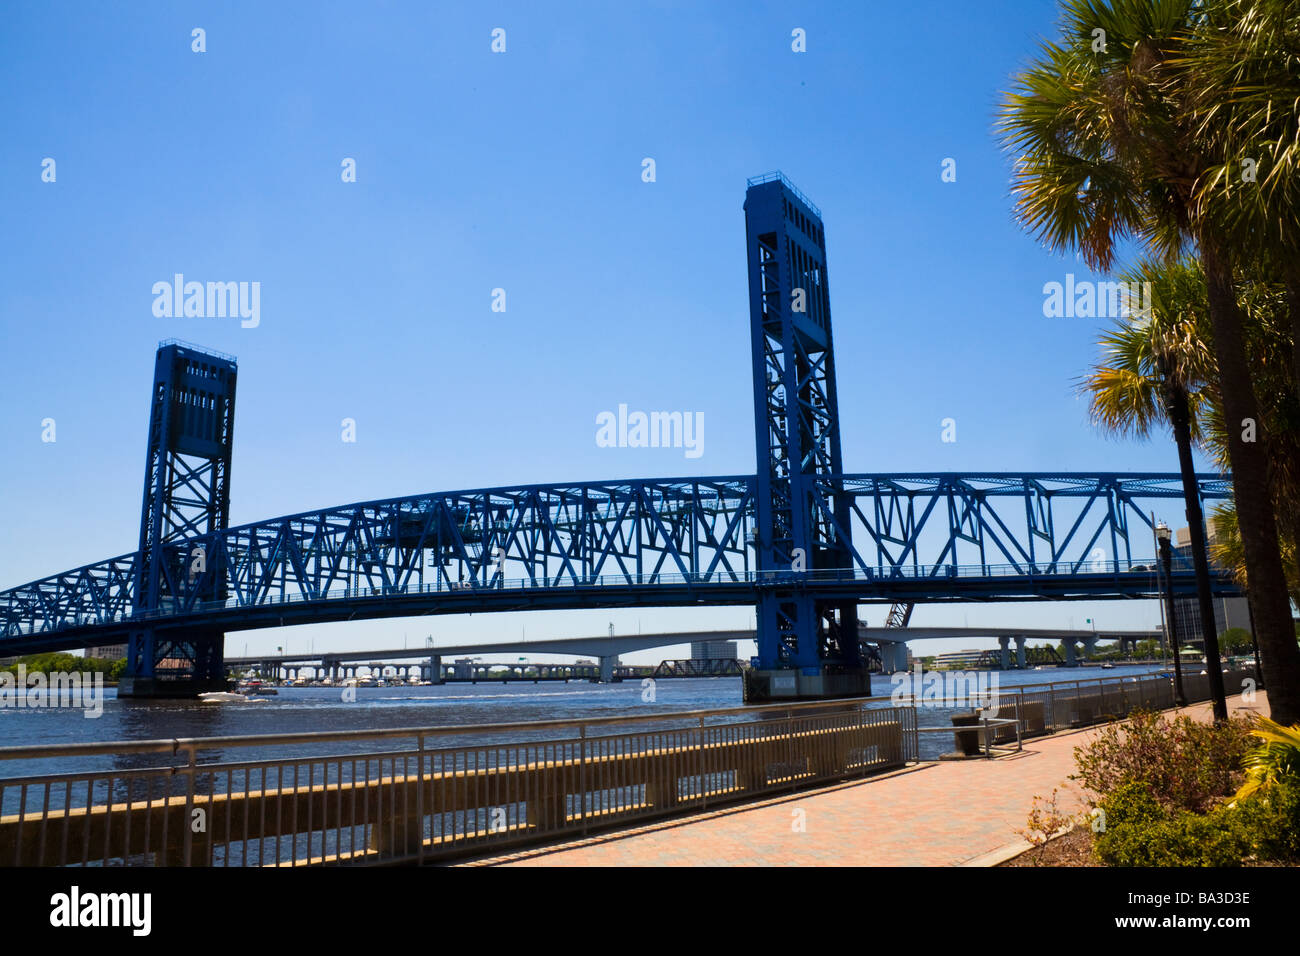 USA, Florida, Jacksonville - The blue Main Street Bridge over the St. John's River from the Riverwalk on the Northbank Stock Photo